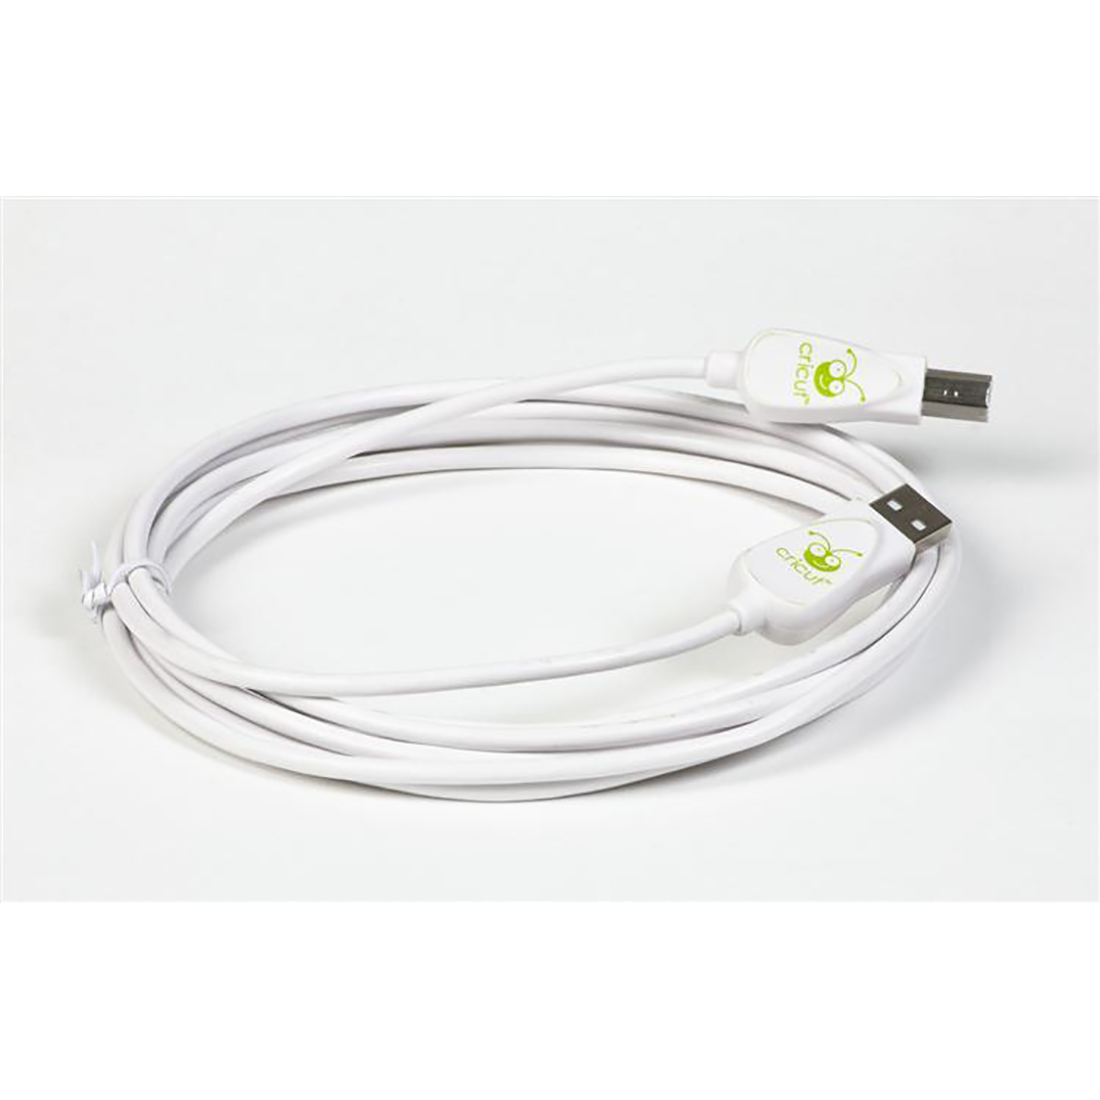 Cricut³ USB Cable